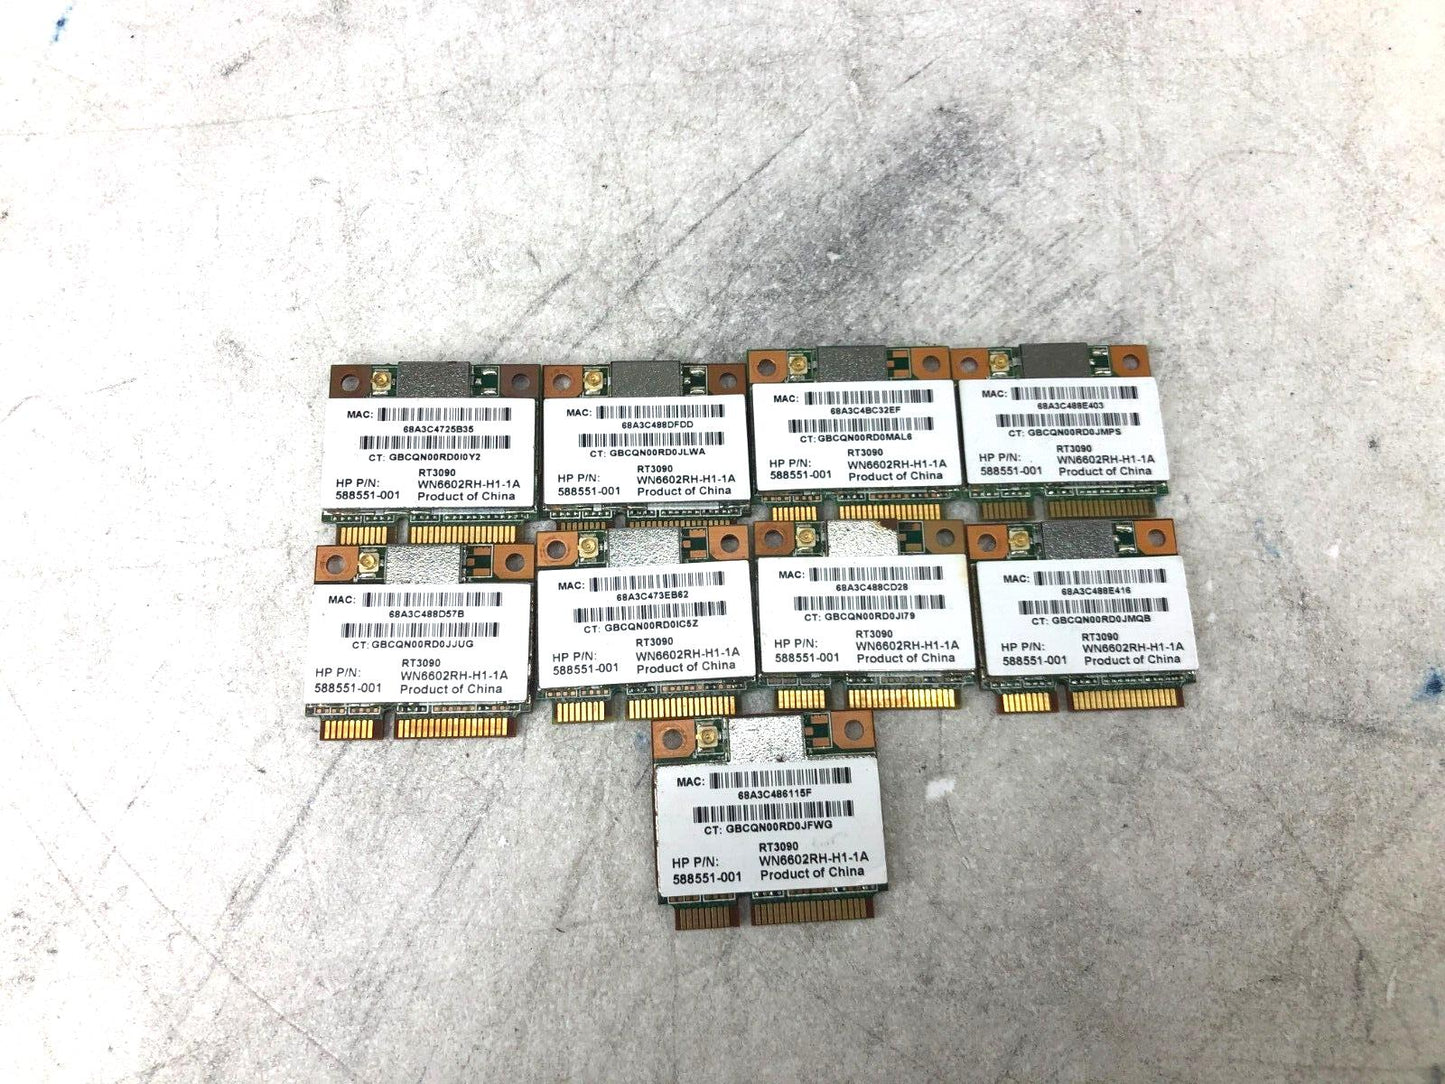 Lot of 9 Ralink RT3090 802.11b/g/n Mini Express Wireless Card- Full Size RT3090